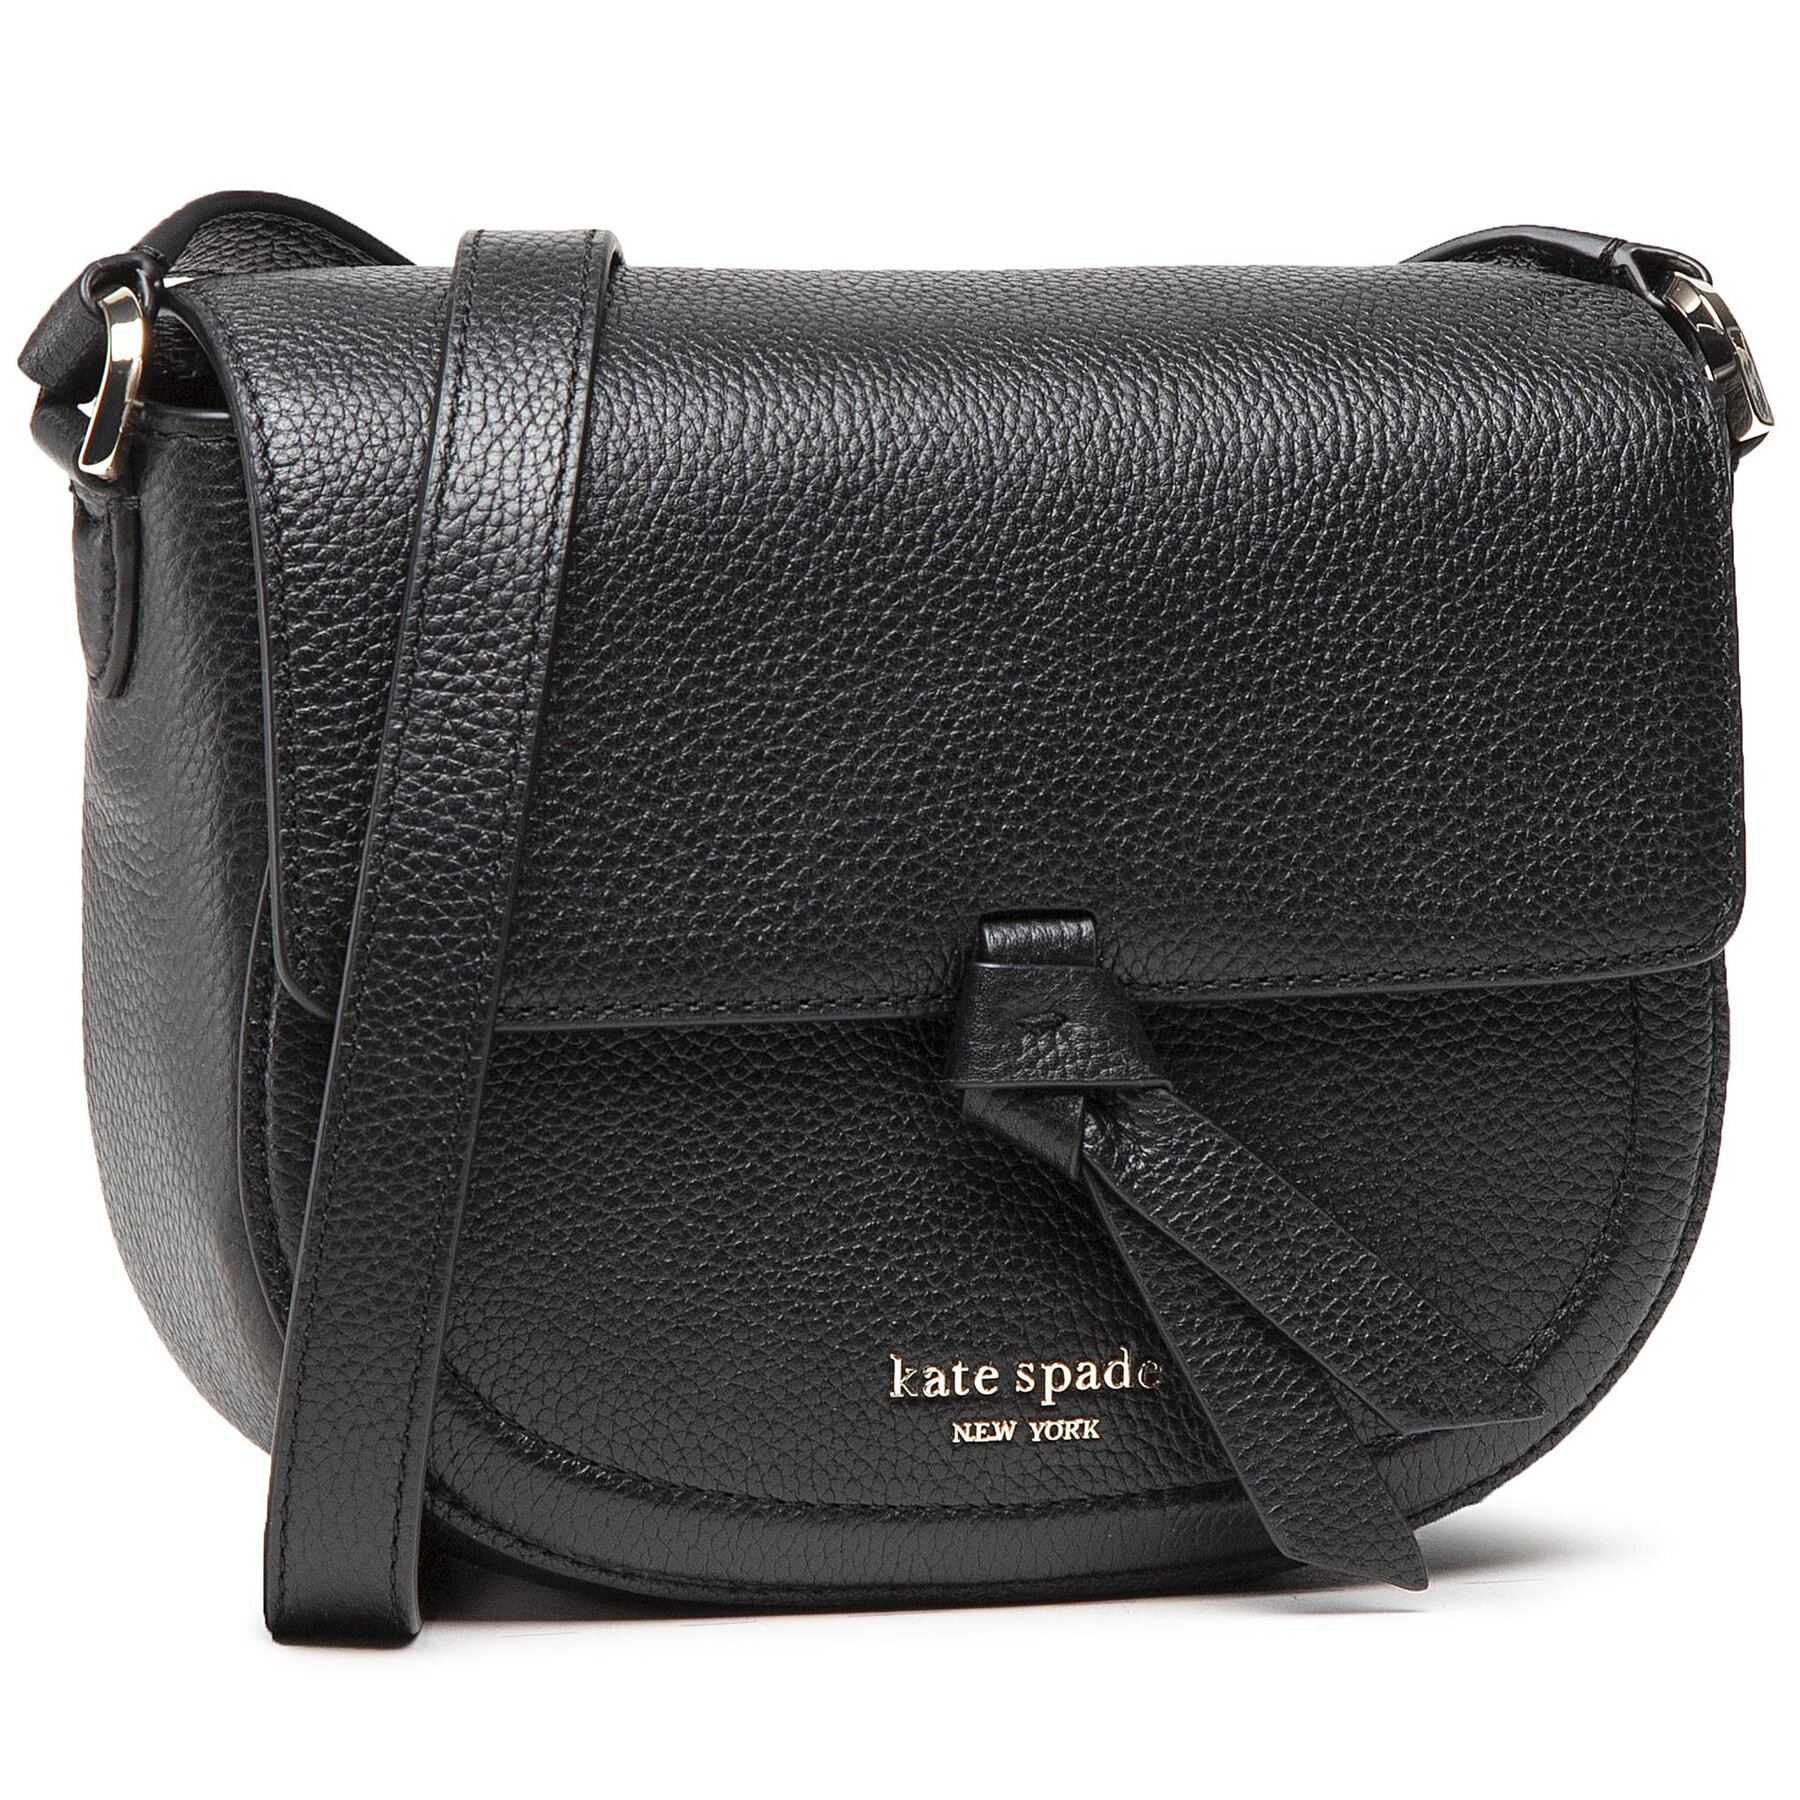 Geantă Kate Spade Md Saddle Bag PXR00507 Black 001